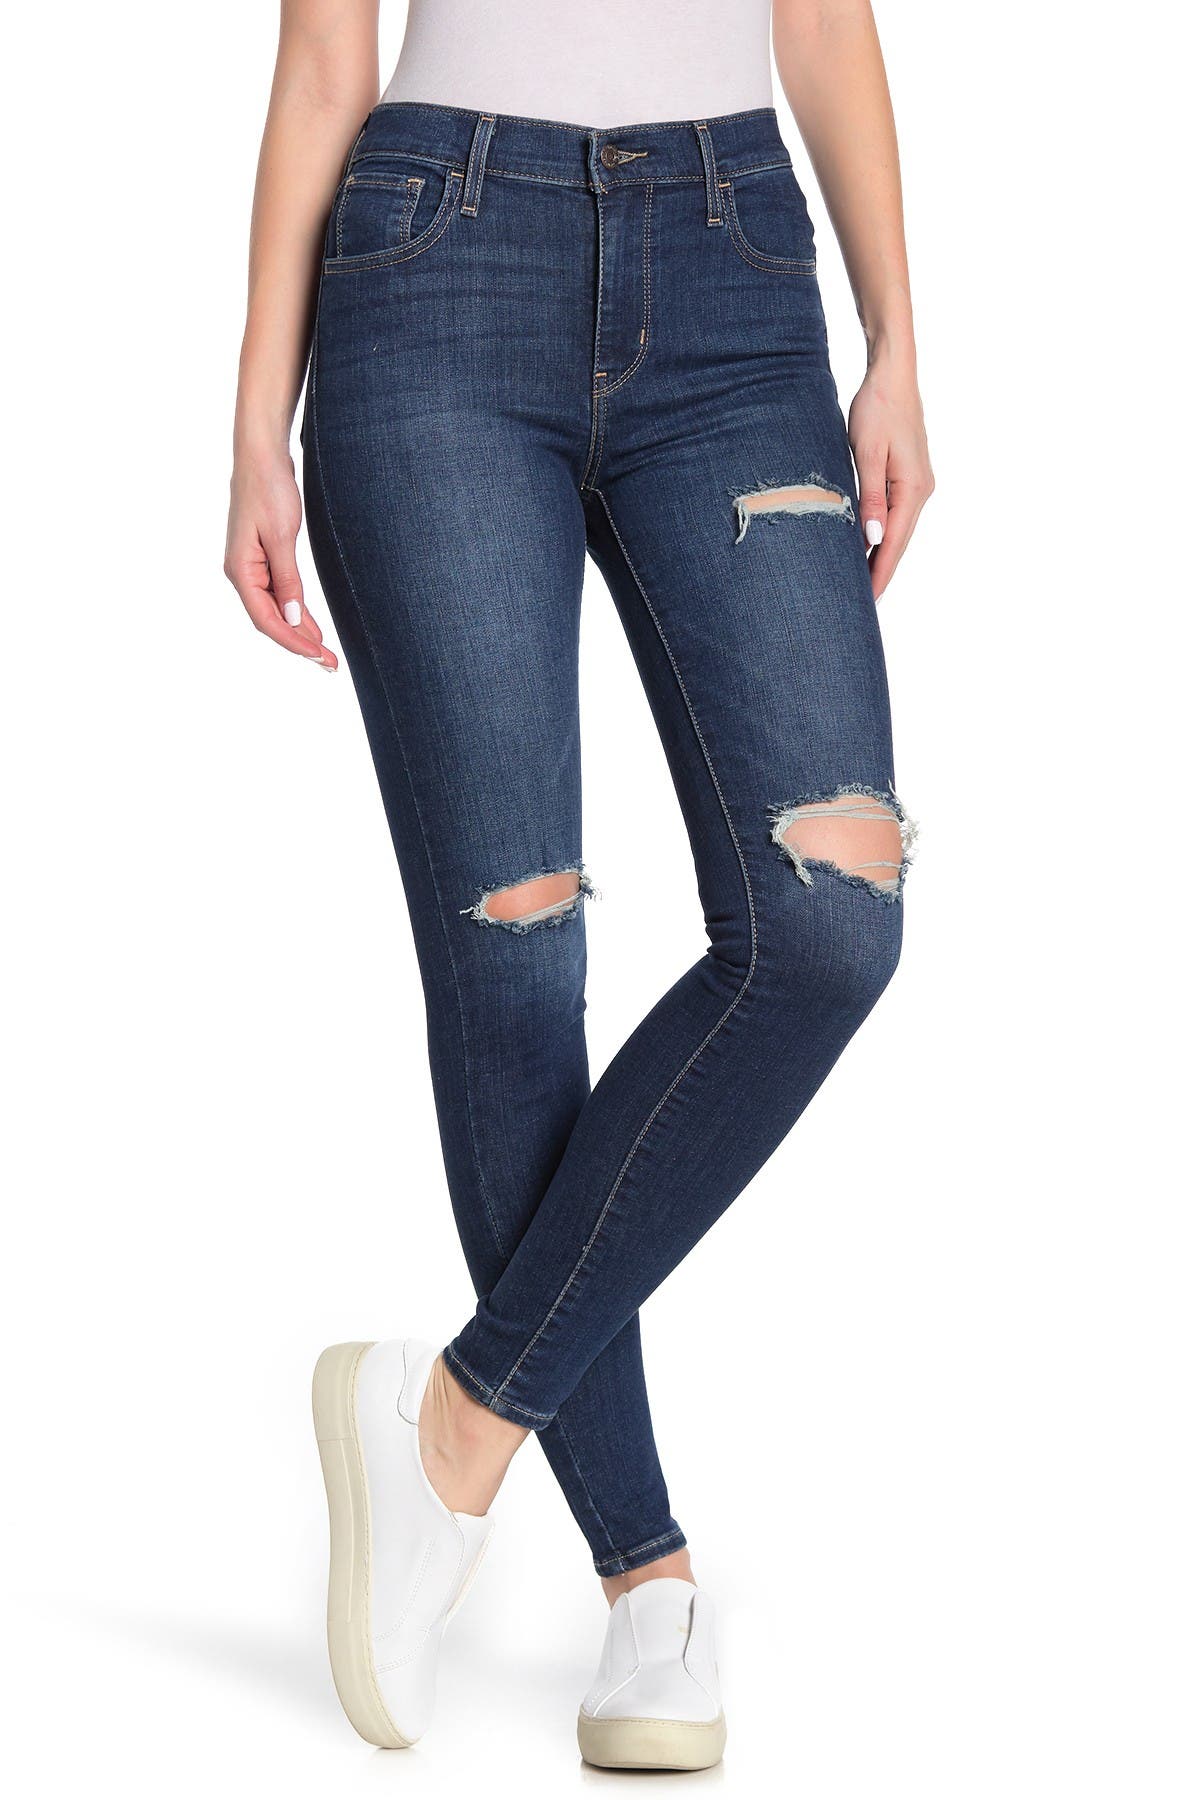 levi's super skinny high waist jeans